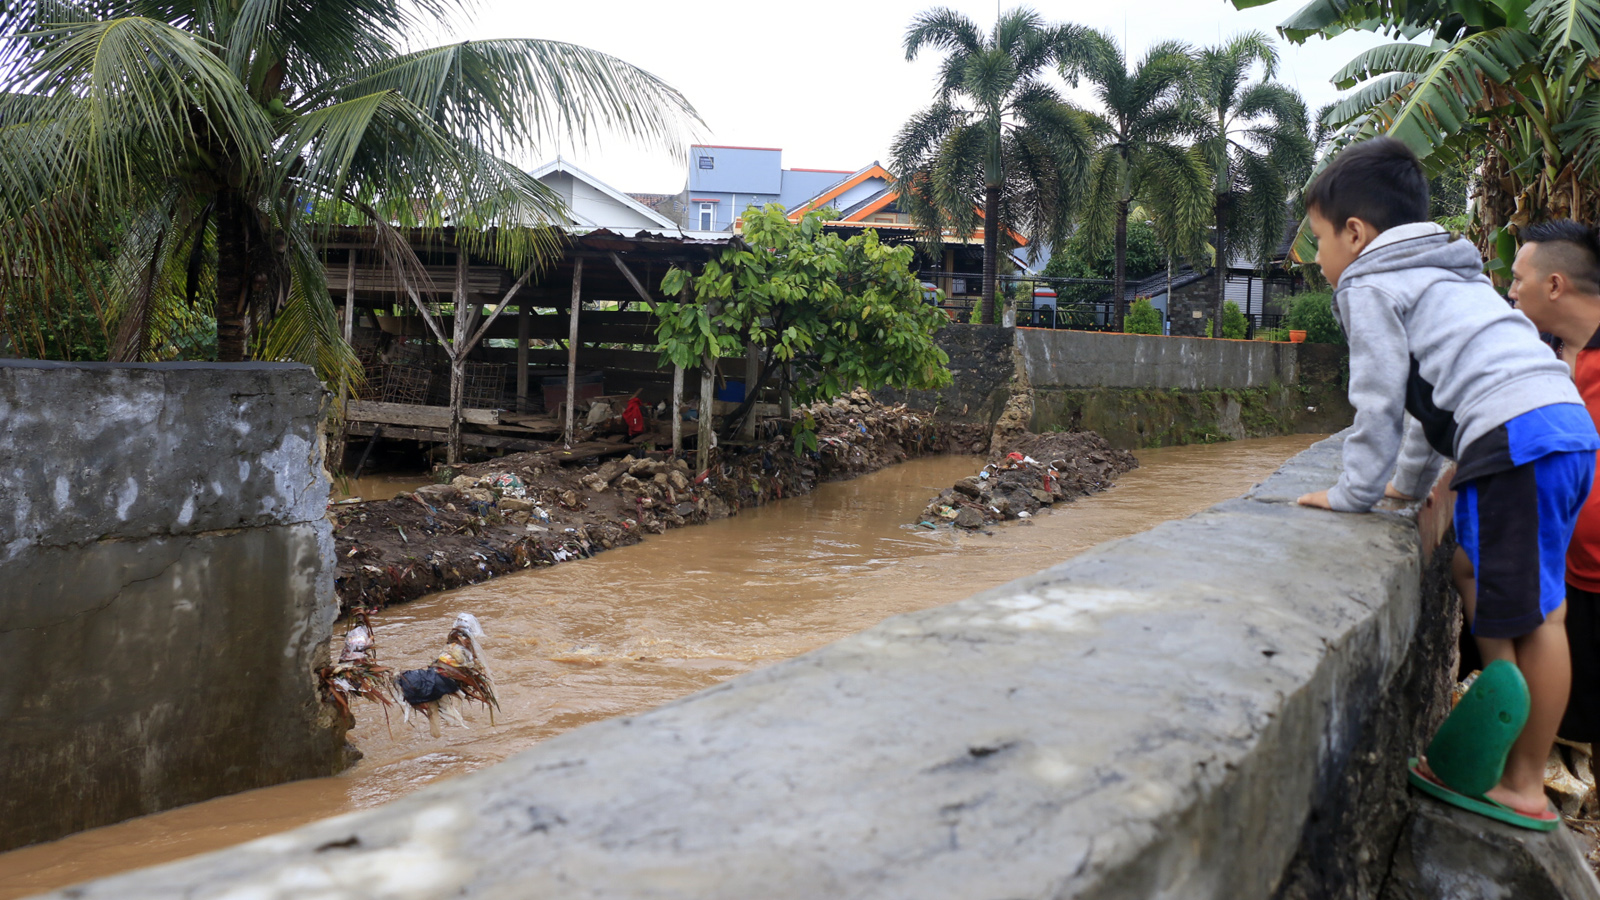 Hujan deras yang mengguyur selama satu jam membuat air di sungai Way Belau, Labuhan Ratu, kembali naik hingga masuk ke rumah warga dengan ketinggian selutut orang dewasa, Minggu (15/04). Tanggul yang sebelumnya sudah jebol yang belum diperbaiki menjadi penyebab utama banjir. (Lampungnews/El Shinta)